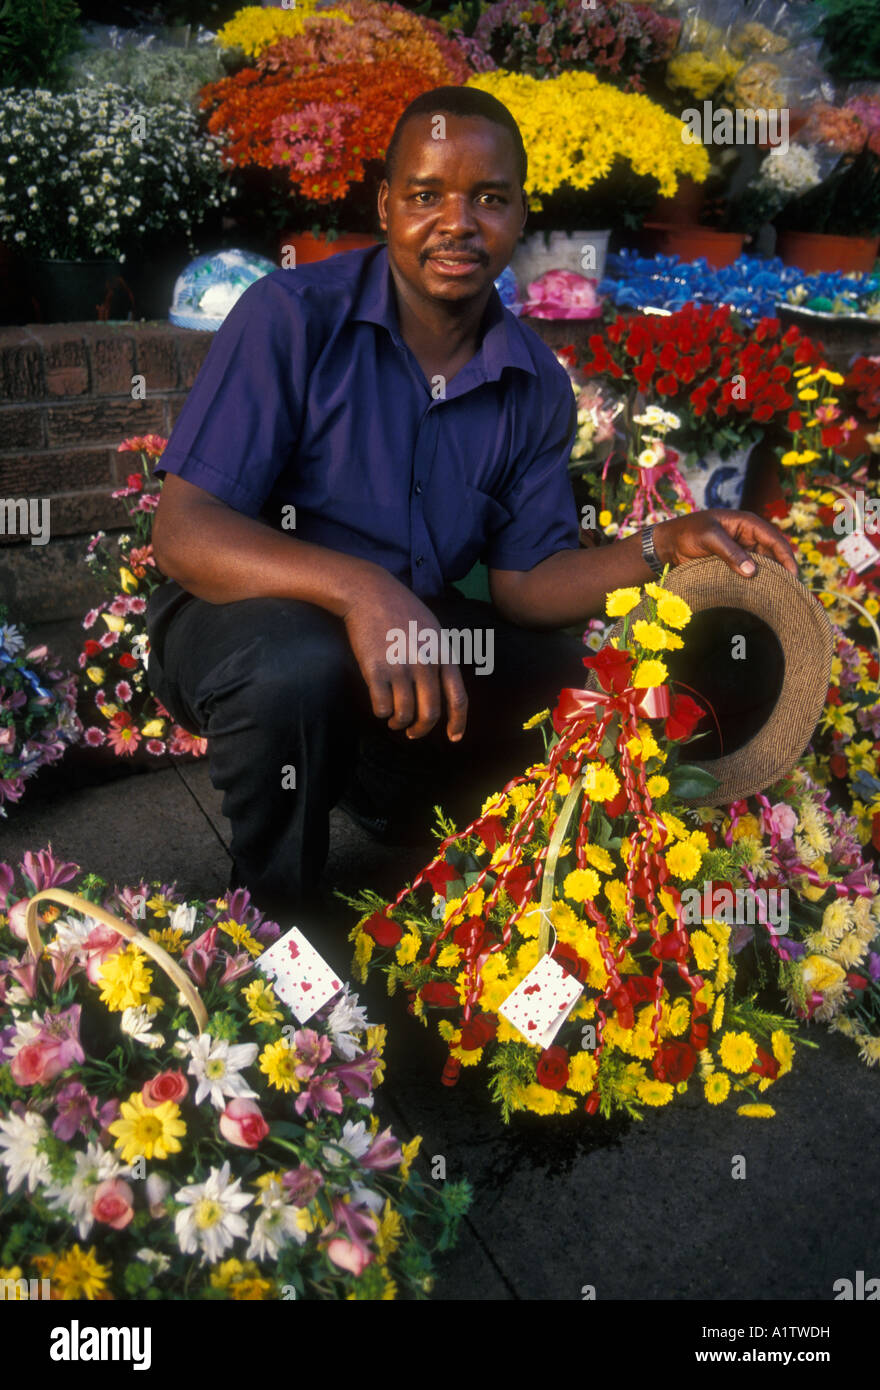 1, one, Zimbabwean man, Zimbabwean, man, adult man, flower vendor, vendor, selling flowers, city of Harare, Harare, Harare Province, Zimbabwe, Africa Stock Photo